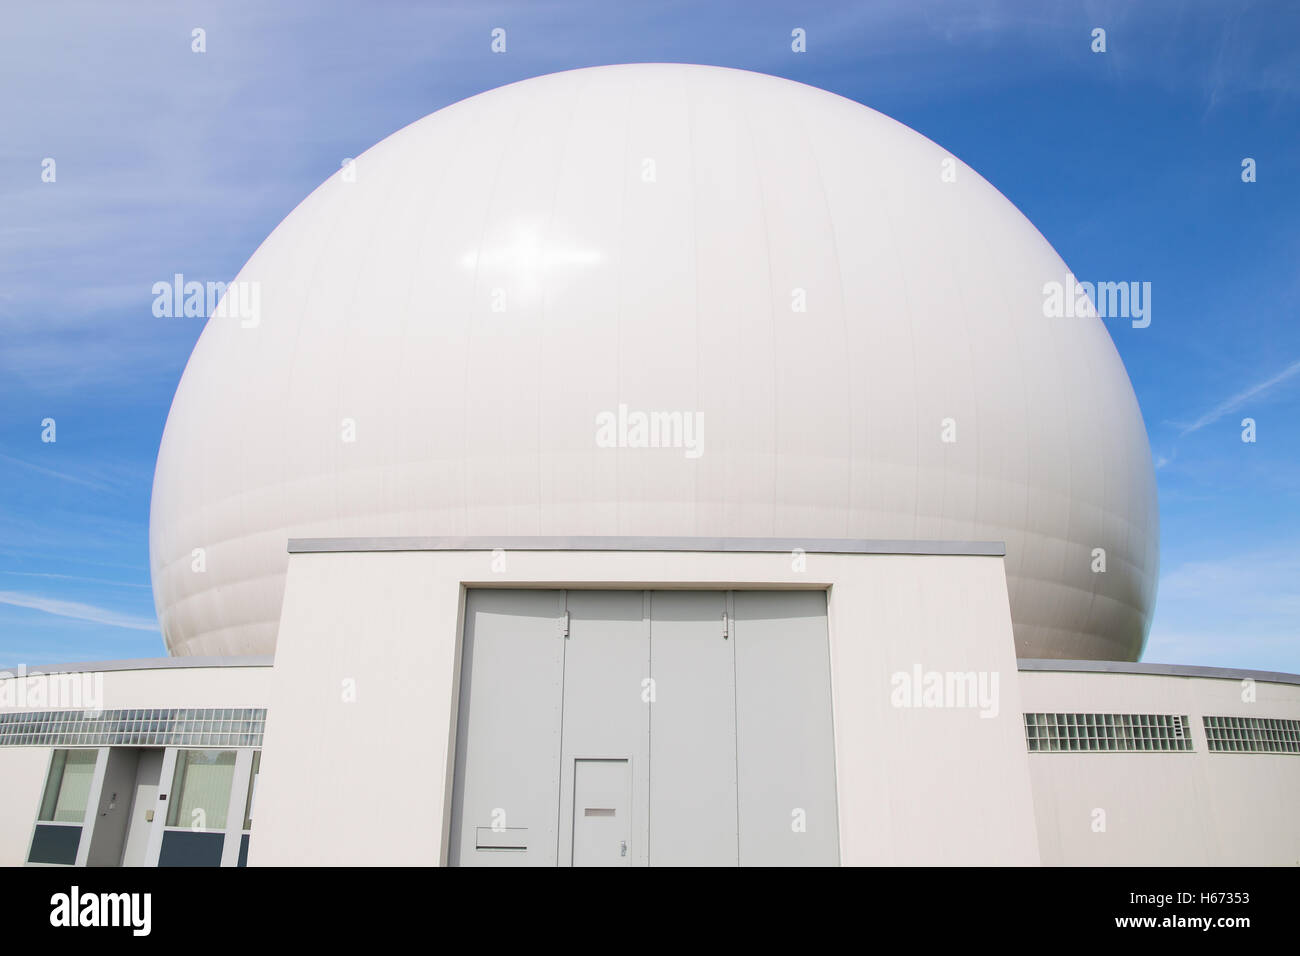 Big cupola of radiolocation terrestrial station radar antenna for radio satellite communications and telecommunication Stock Photo